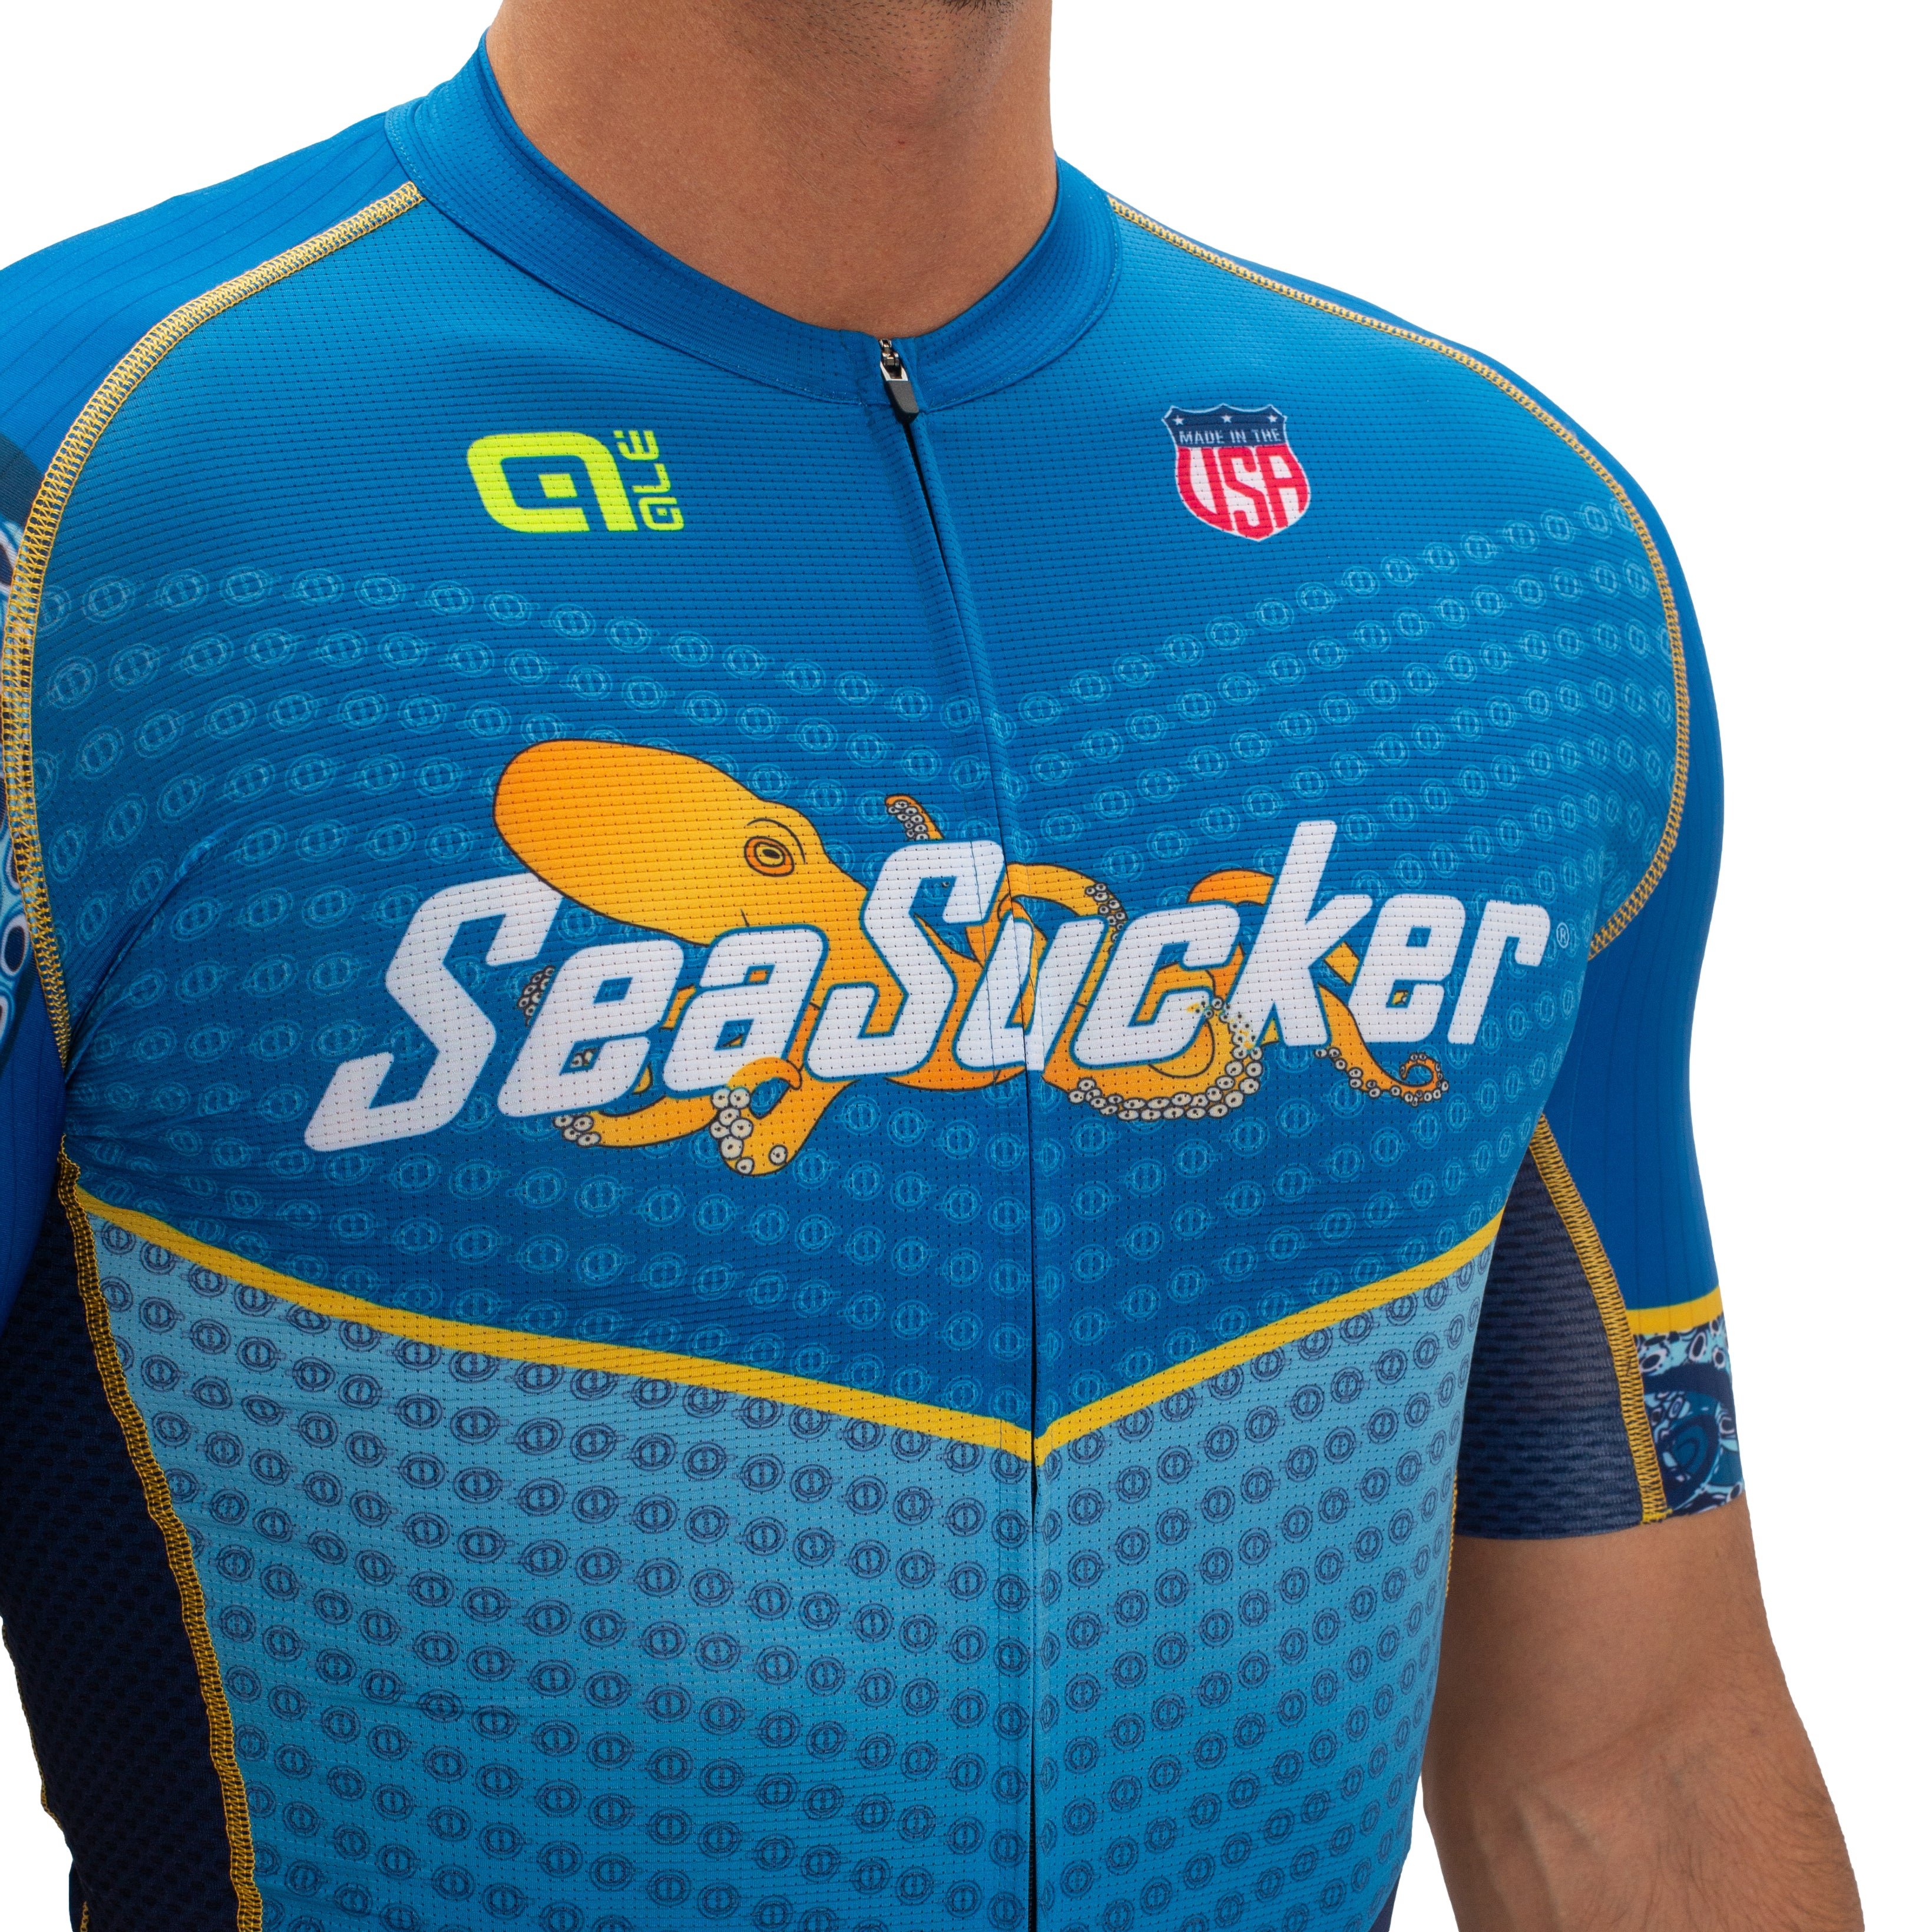 SeaSucker 2022 Mens Cycling Kit by Ale